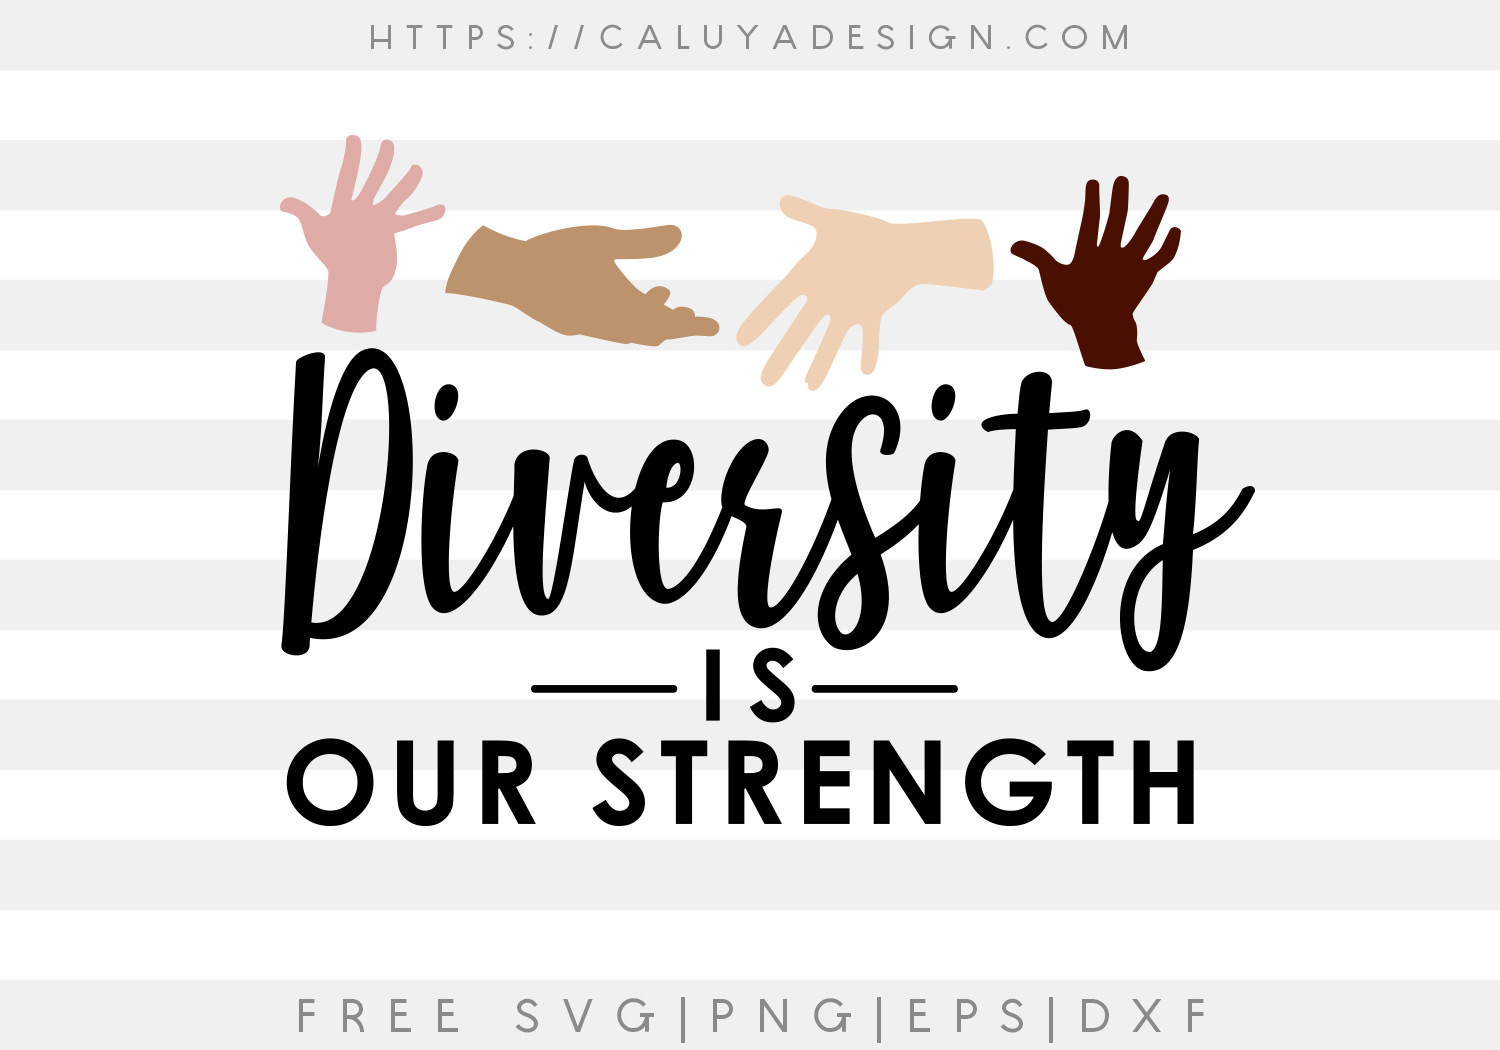 Diversity, Free Full-Text